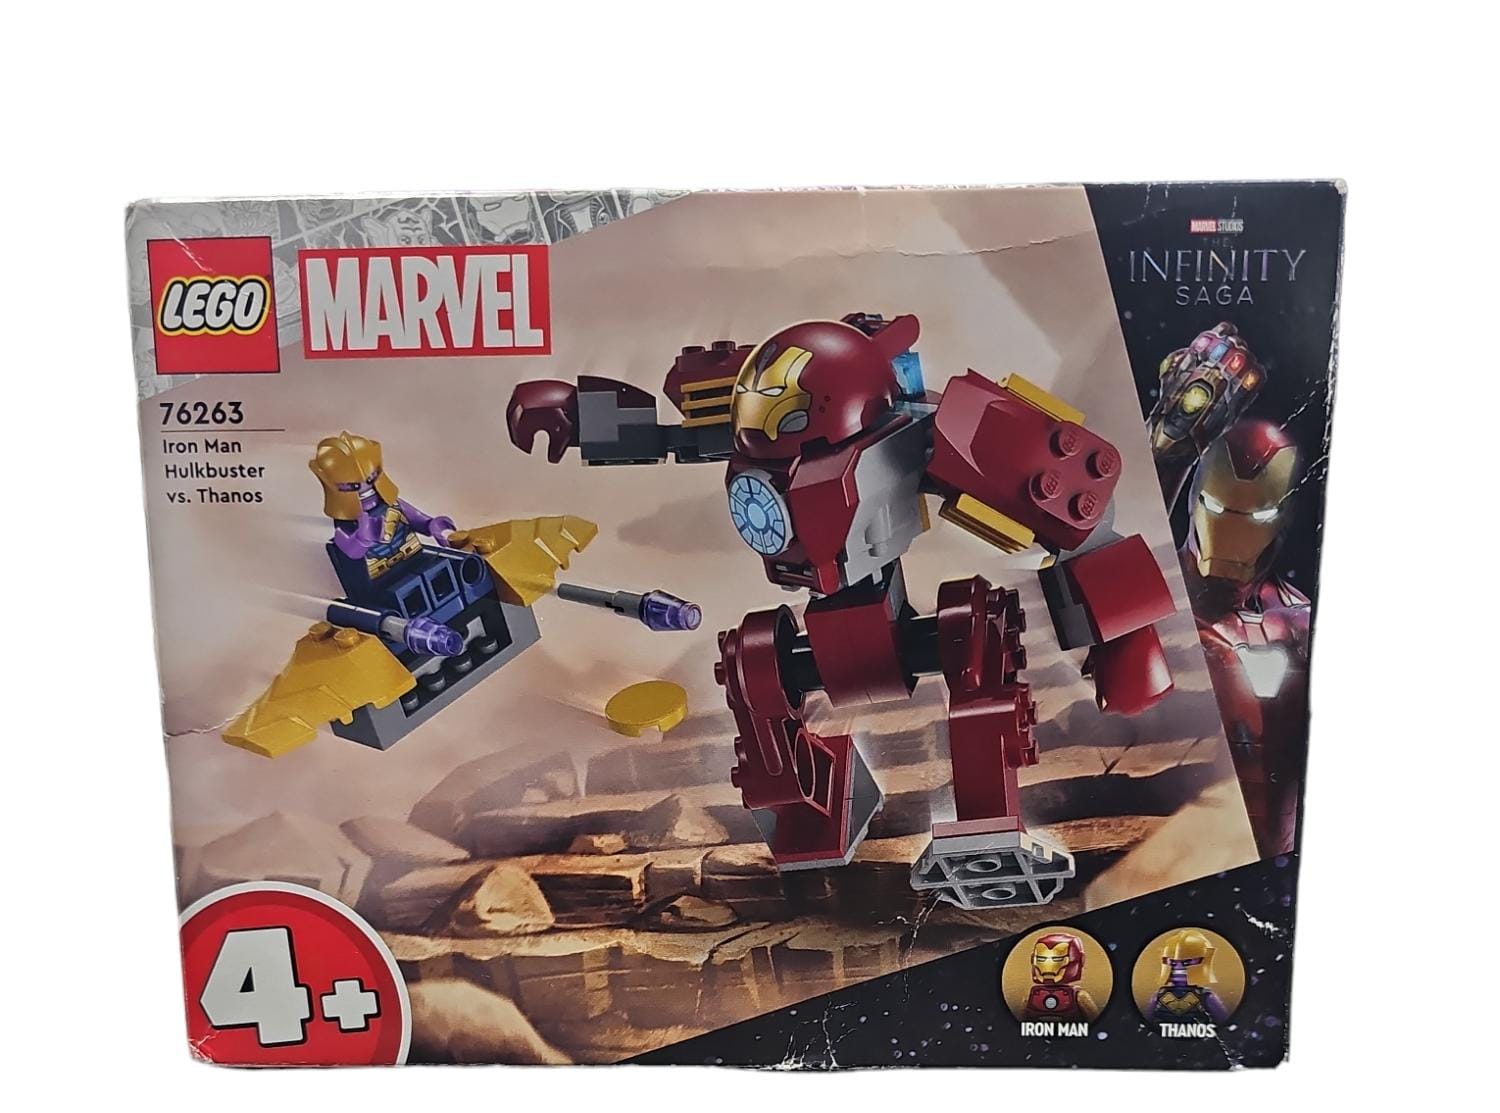 Lego Marvel Iron Man brand new